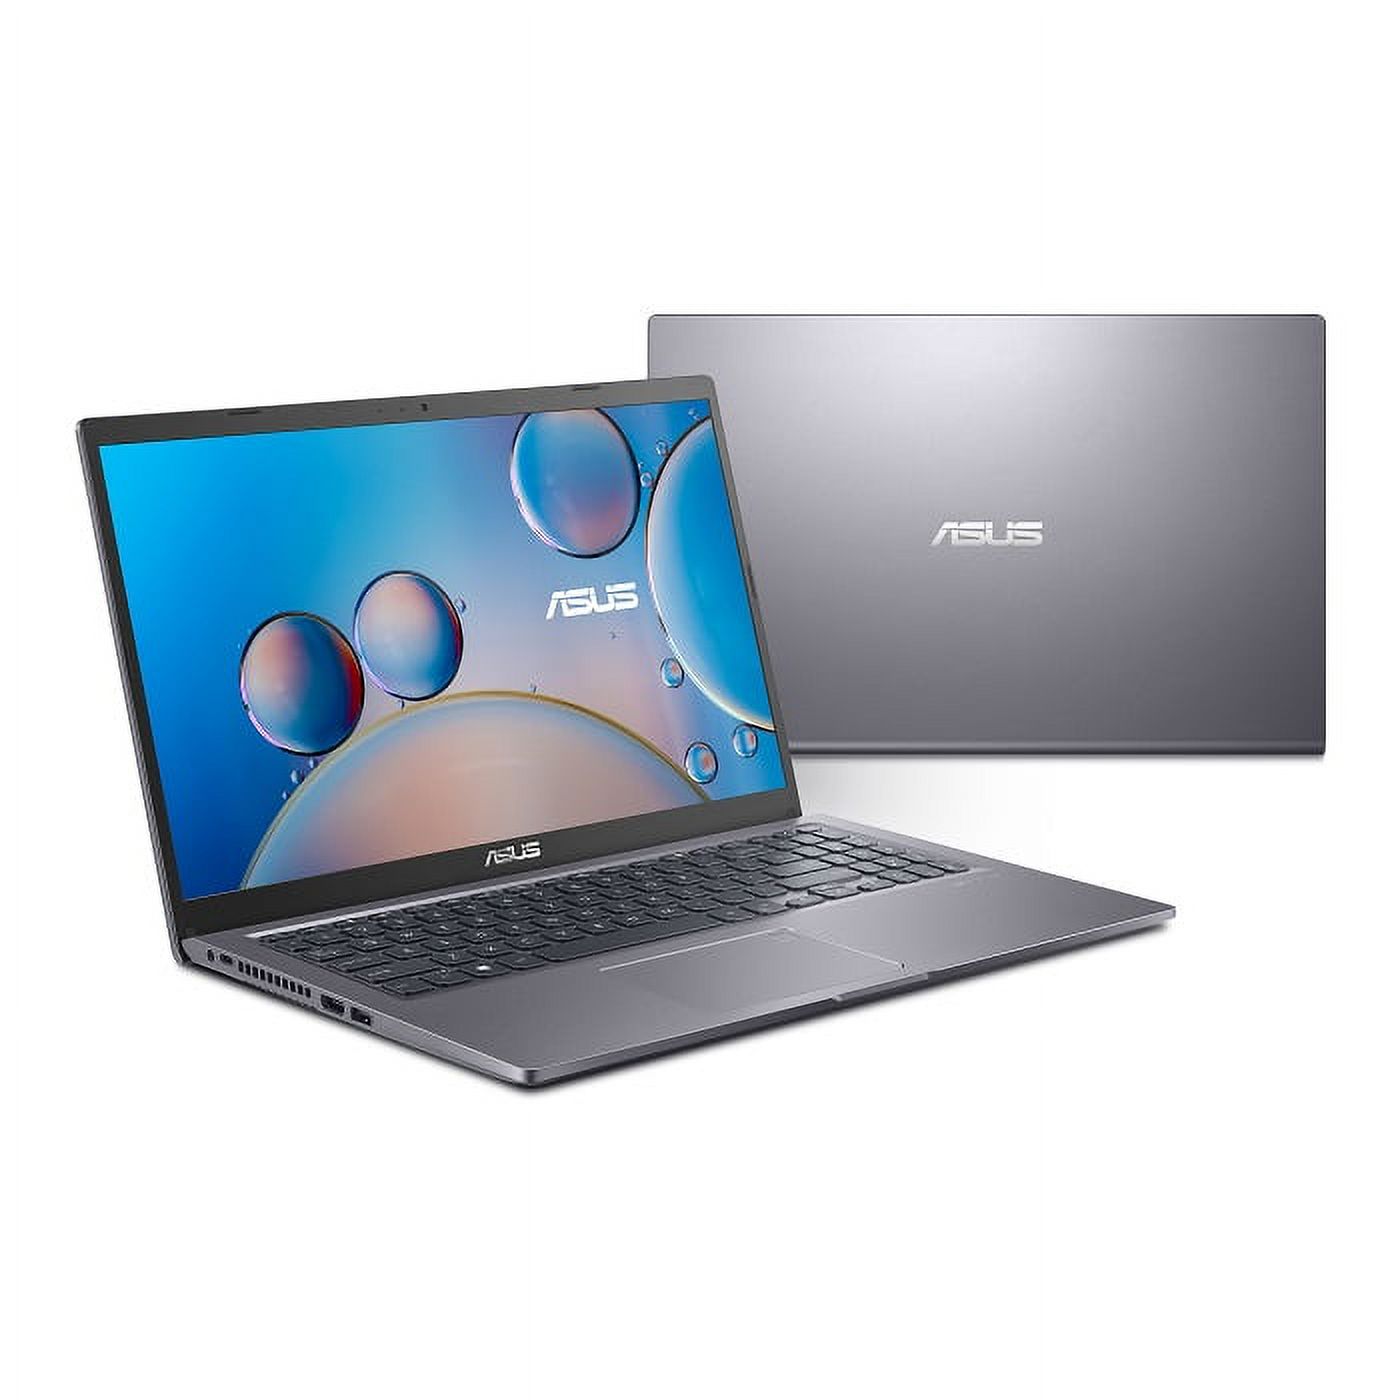 ASUS VivoBook 15.6" 1080p PC Laptops, Intel Core i3, 4GB RAM, 128GB SSD, Windows 11 Home in S Mode, Slate Gray, F515EA-WS31 - image 1 of 6